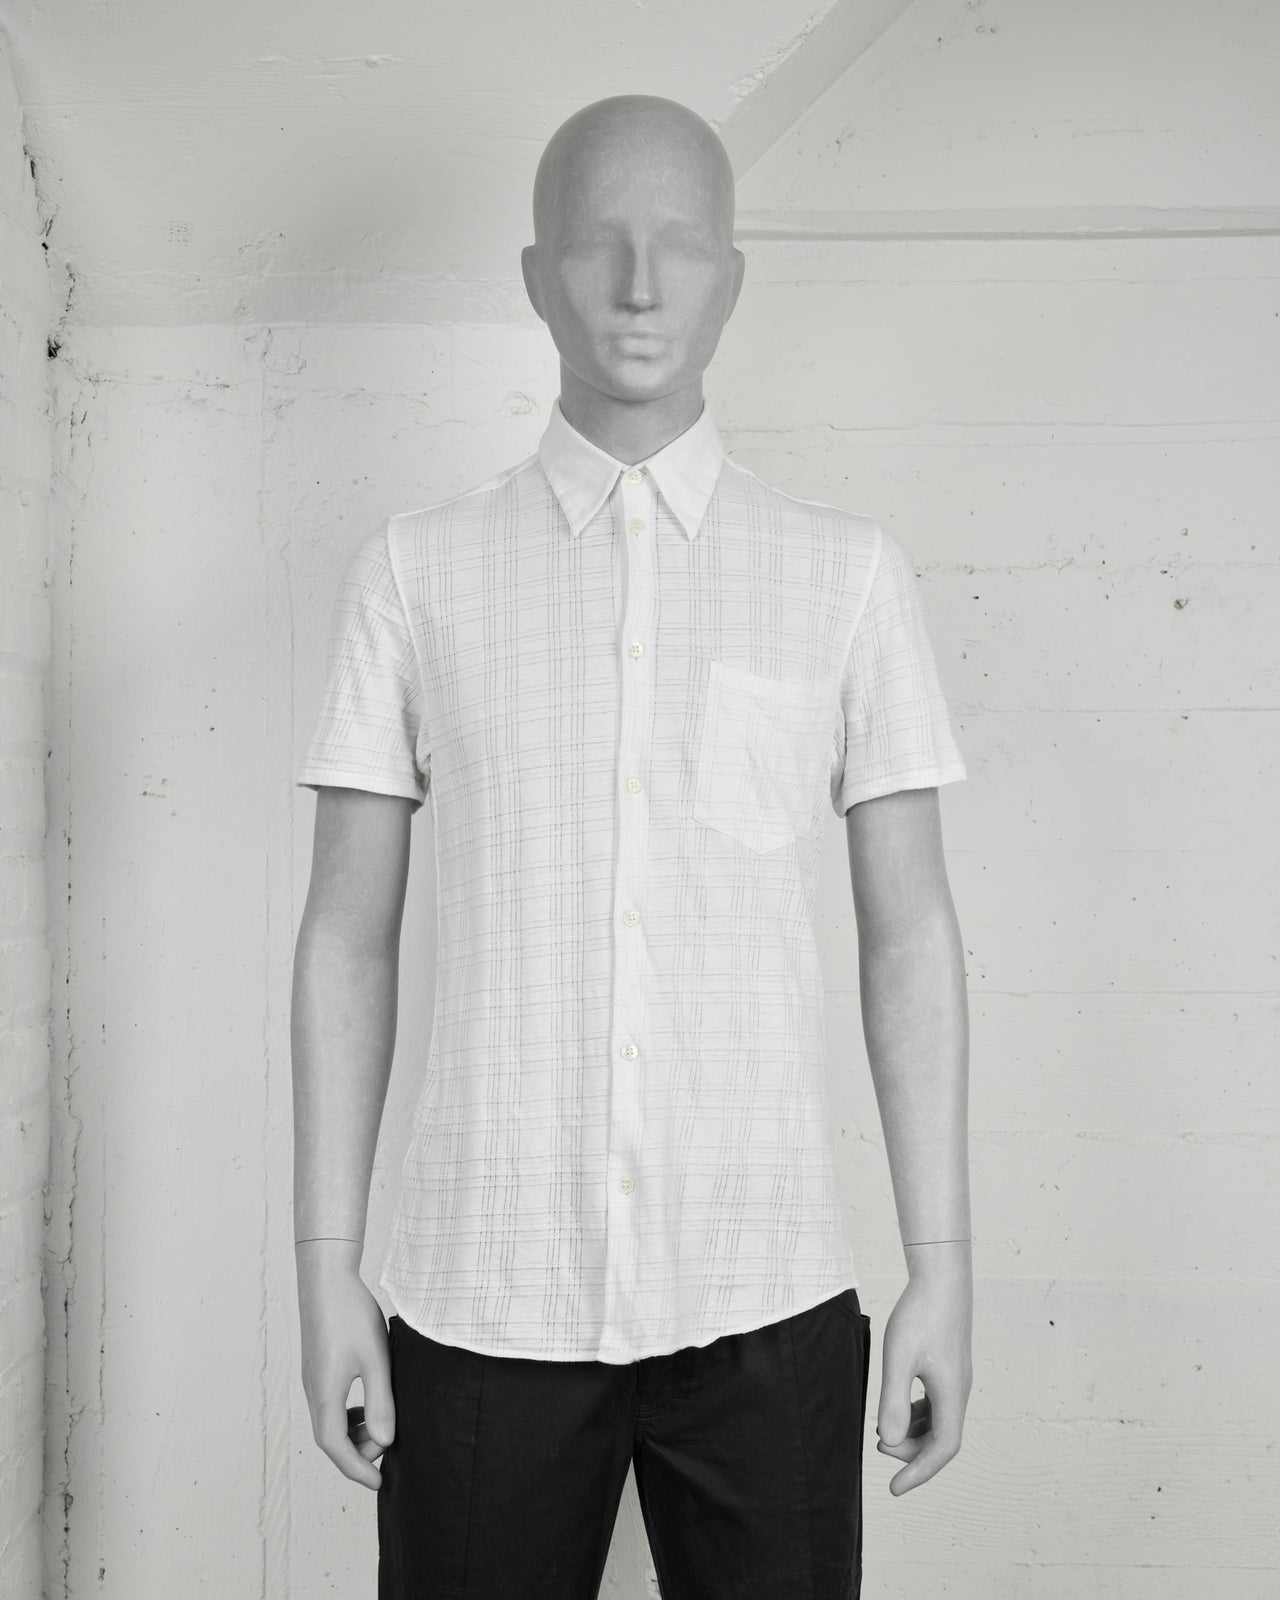 Helmut Lang Drop-Stitch Shirt - SS96